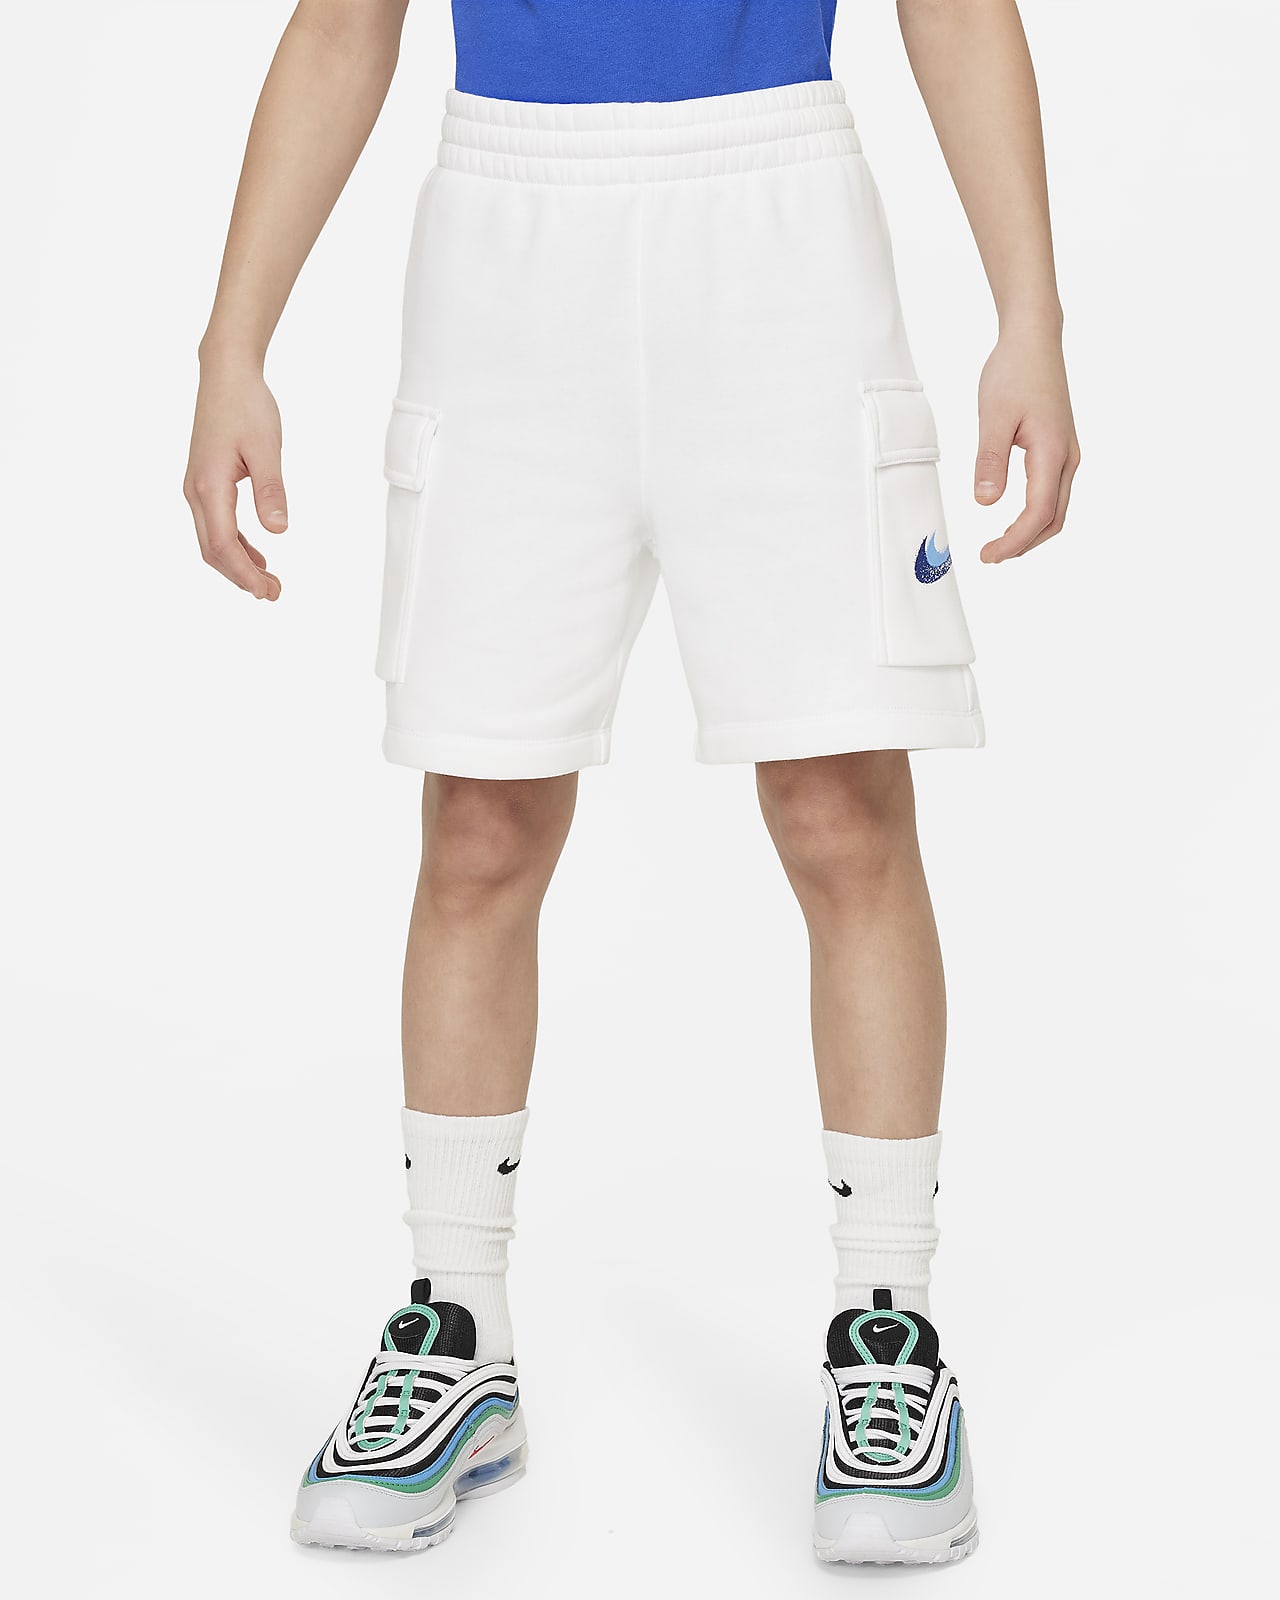 Fleeceshorts Nike Sportswear Standard Issue för ungdom (killar)